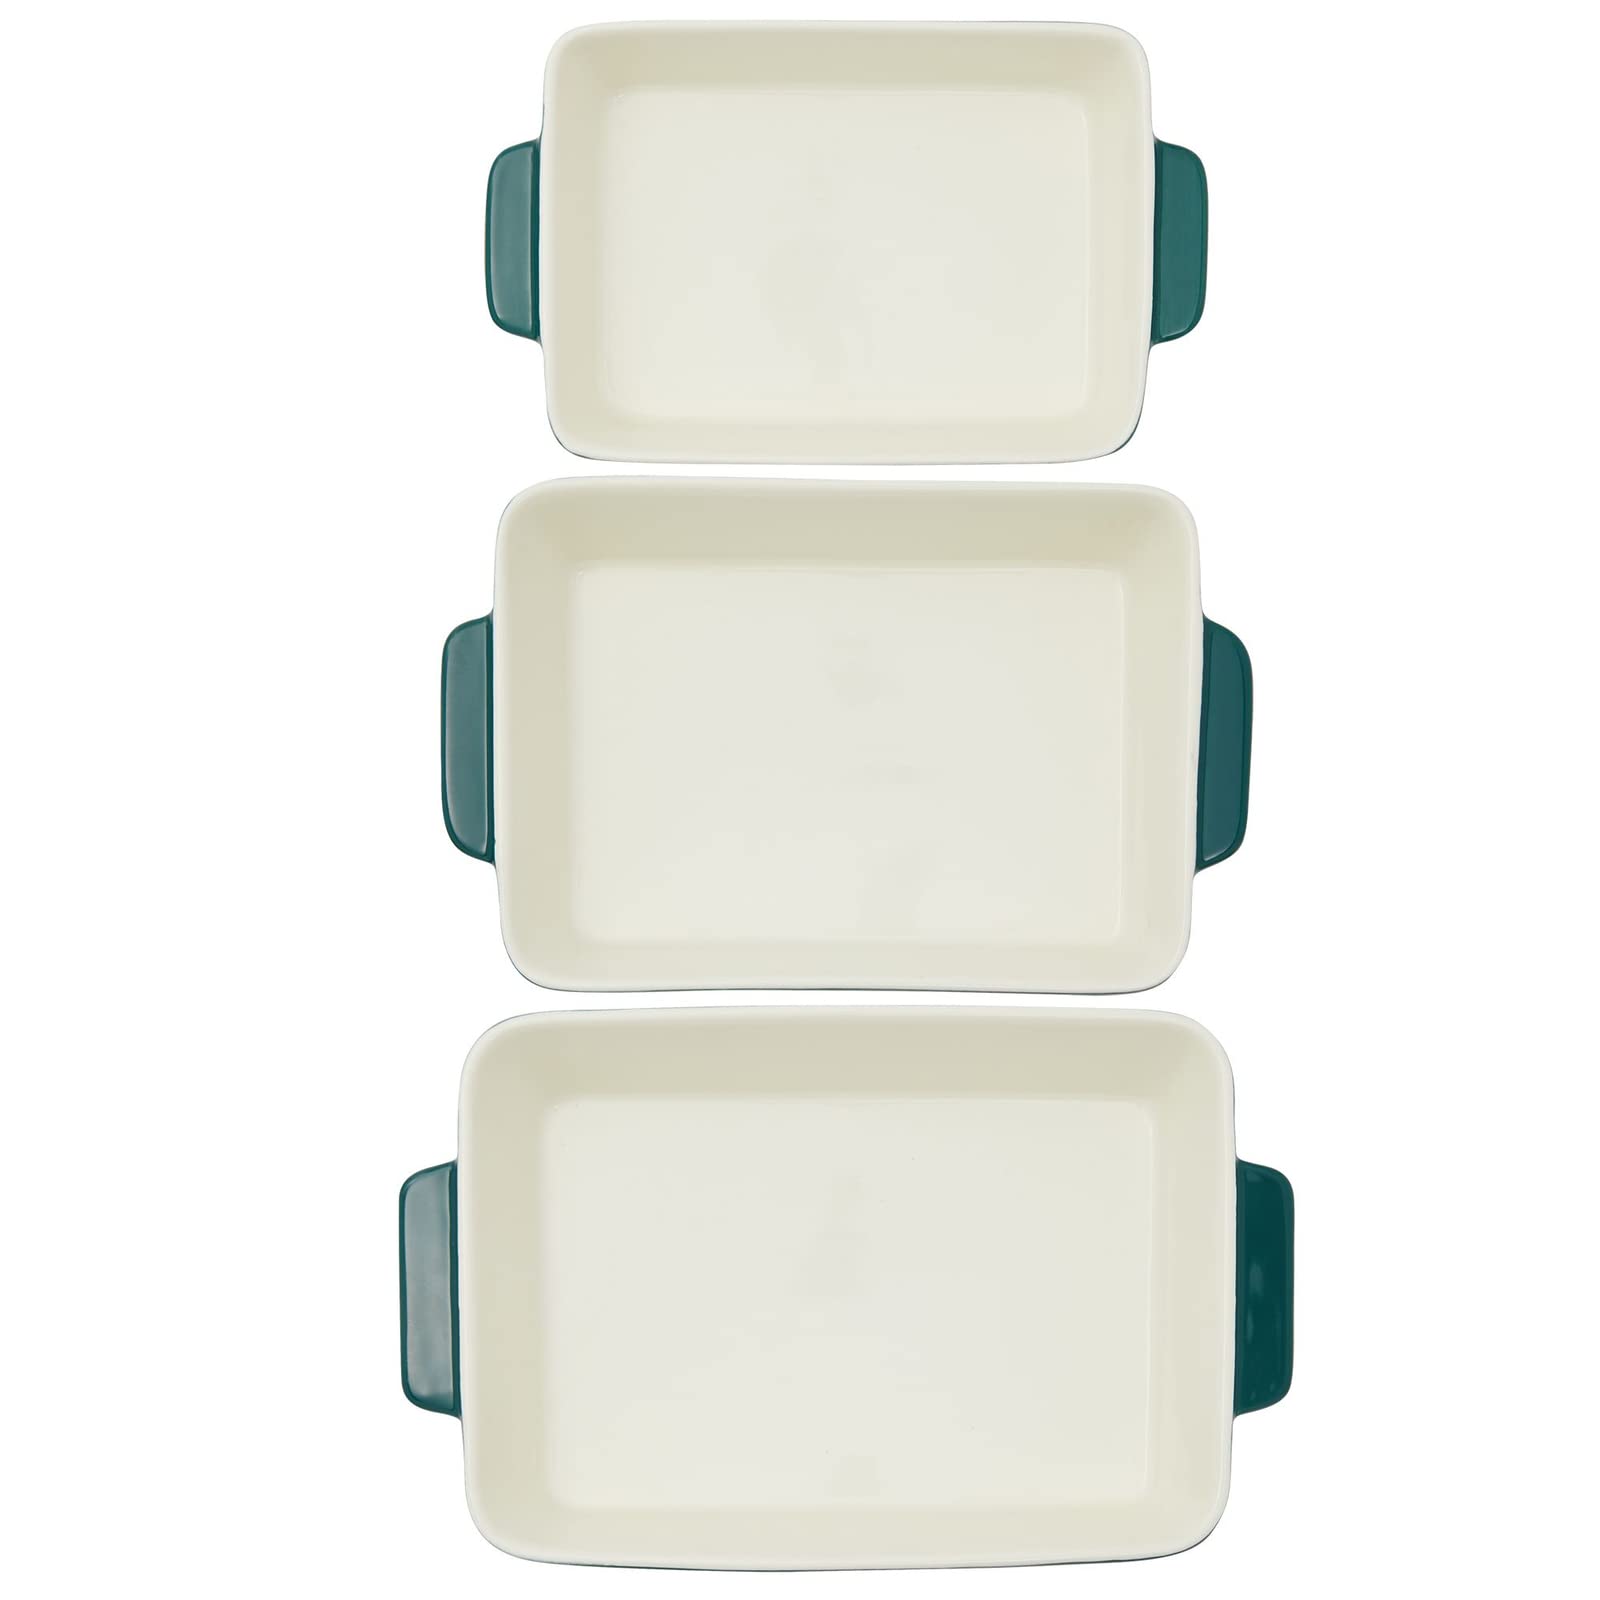 3 Pieces Ceramic Bakeware Set, Porcelain Casserole Dishes for Baking (Green, 3 Rectangular Sizes)